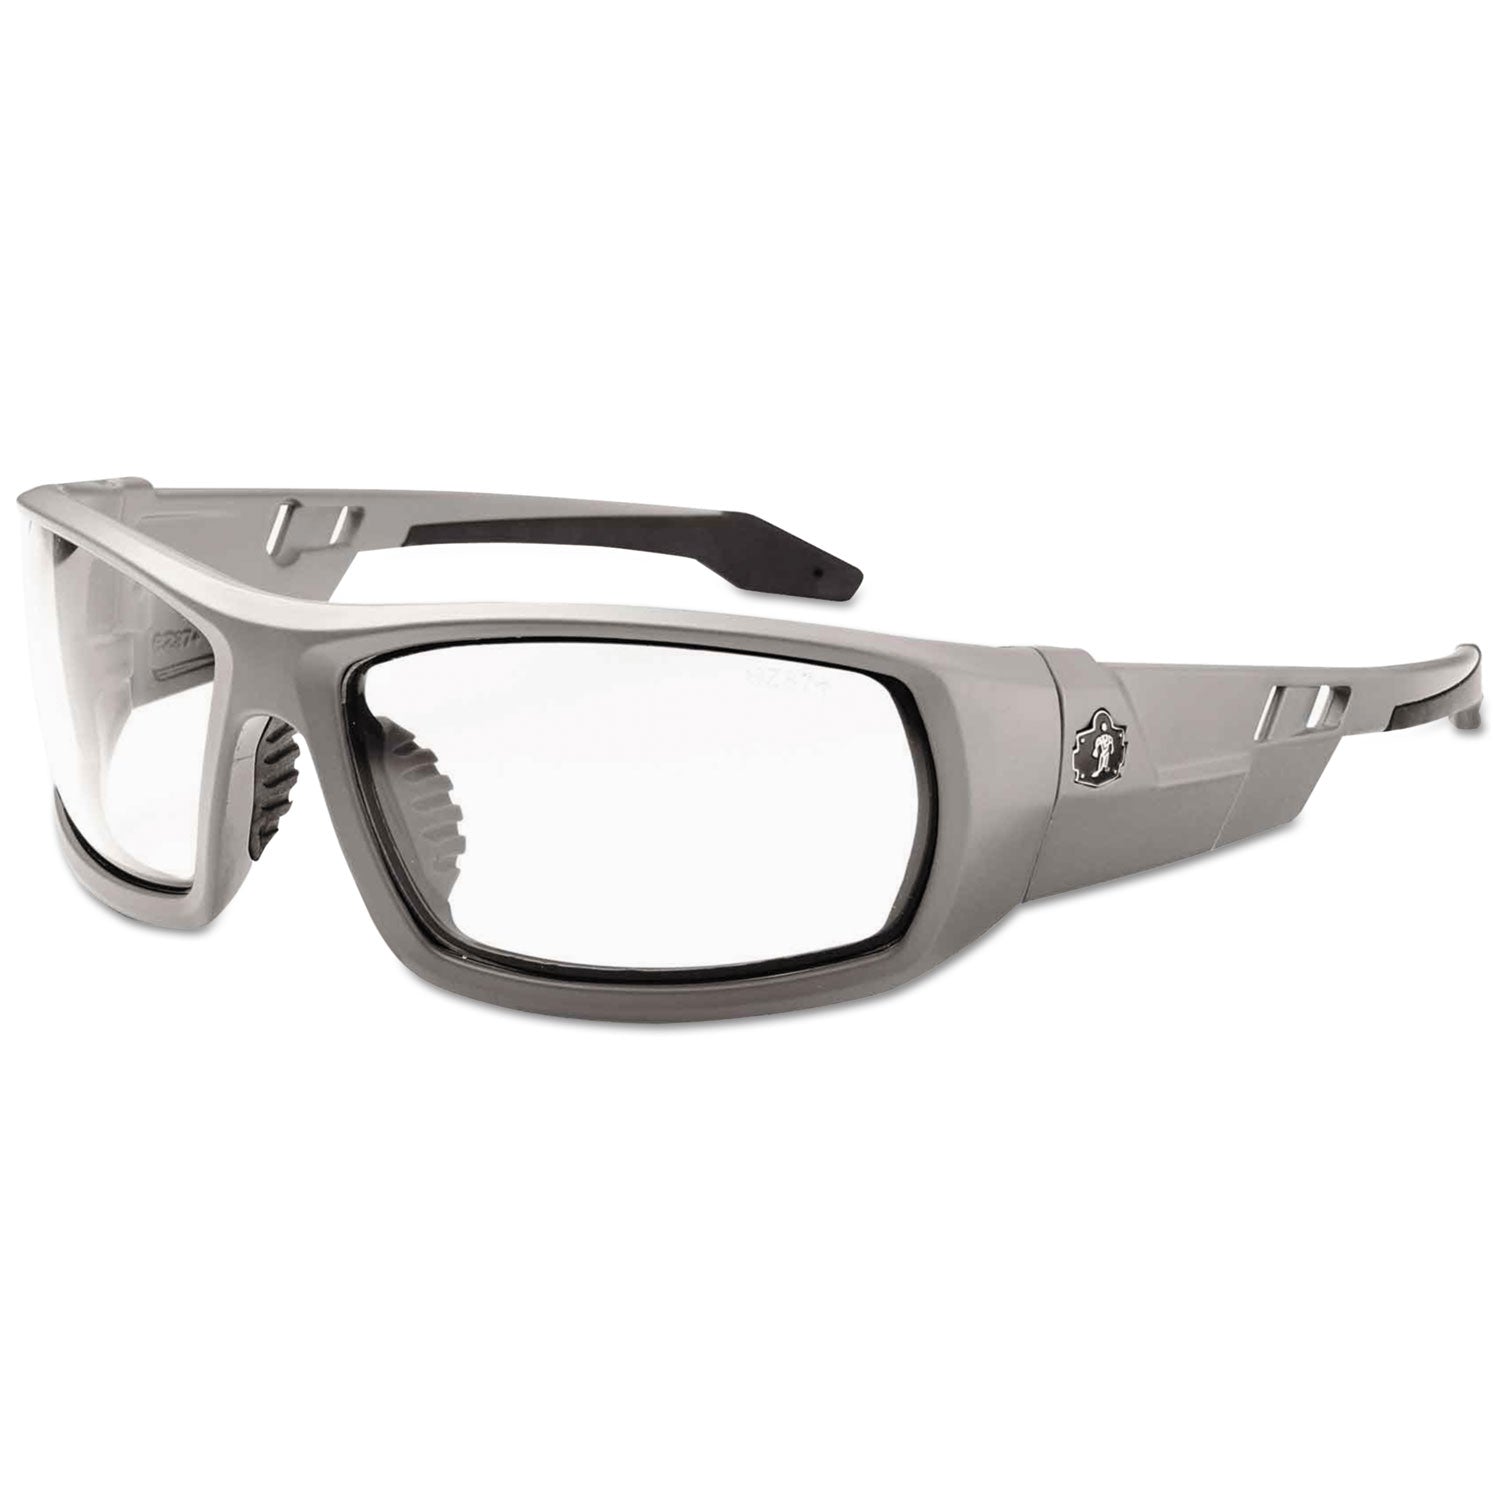 skullerz-odin-safety-glasses-gray-frame-clear-lens-anti-fog-nylon-polycarb-ships-in-1-3-business-days_ego50103 - 1